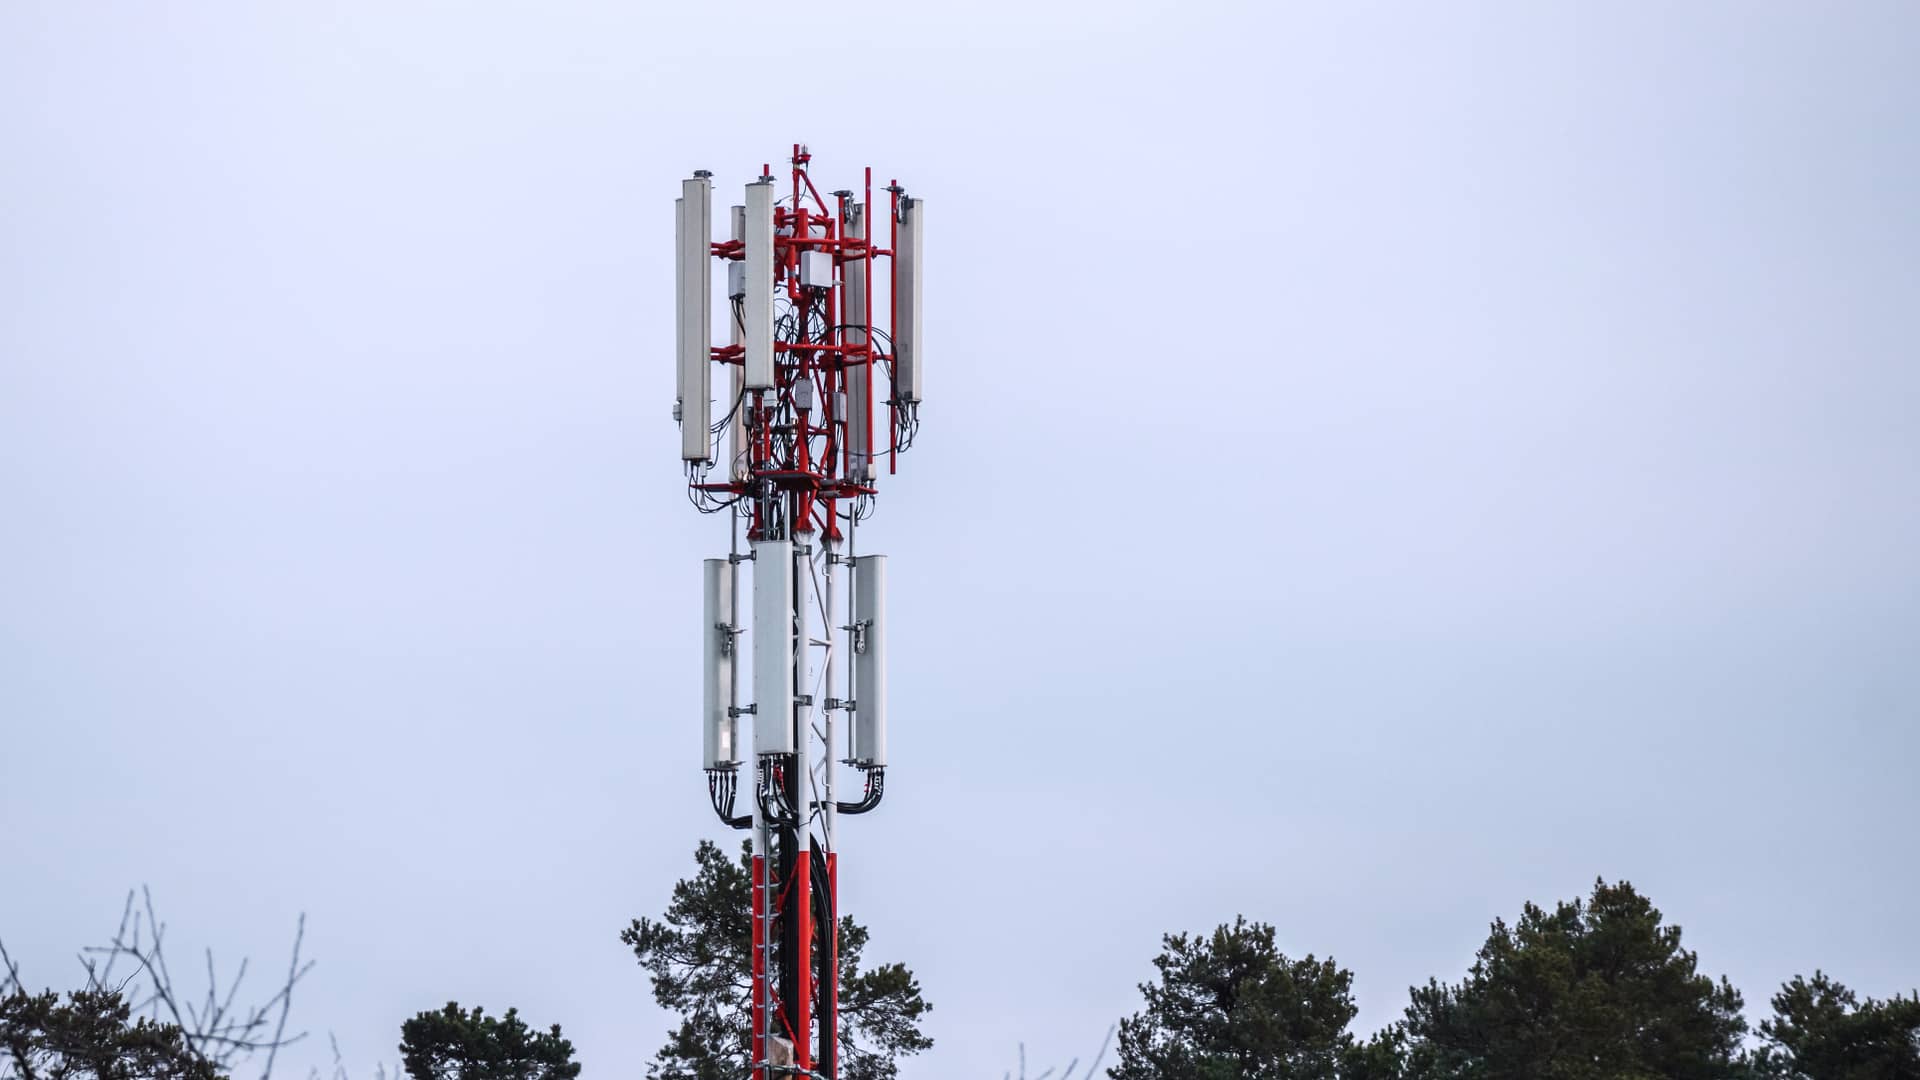 Antena de telecomunicaciones de redes celulares indicando la cobertura disponible con pillofón